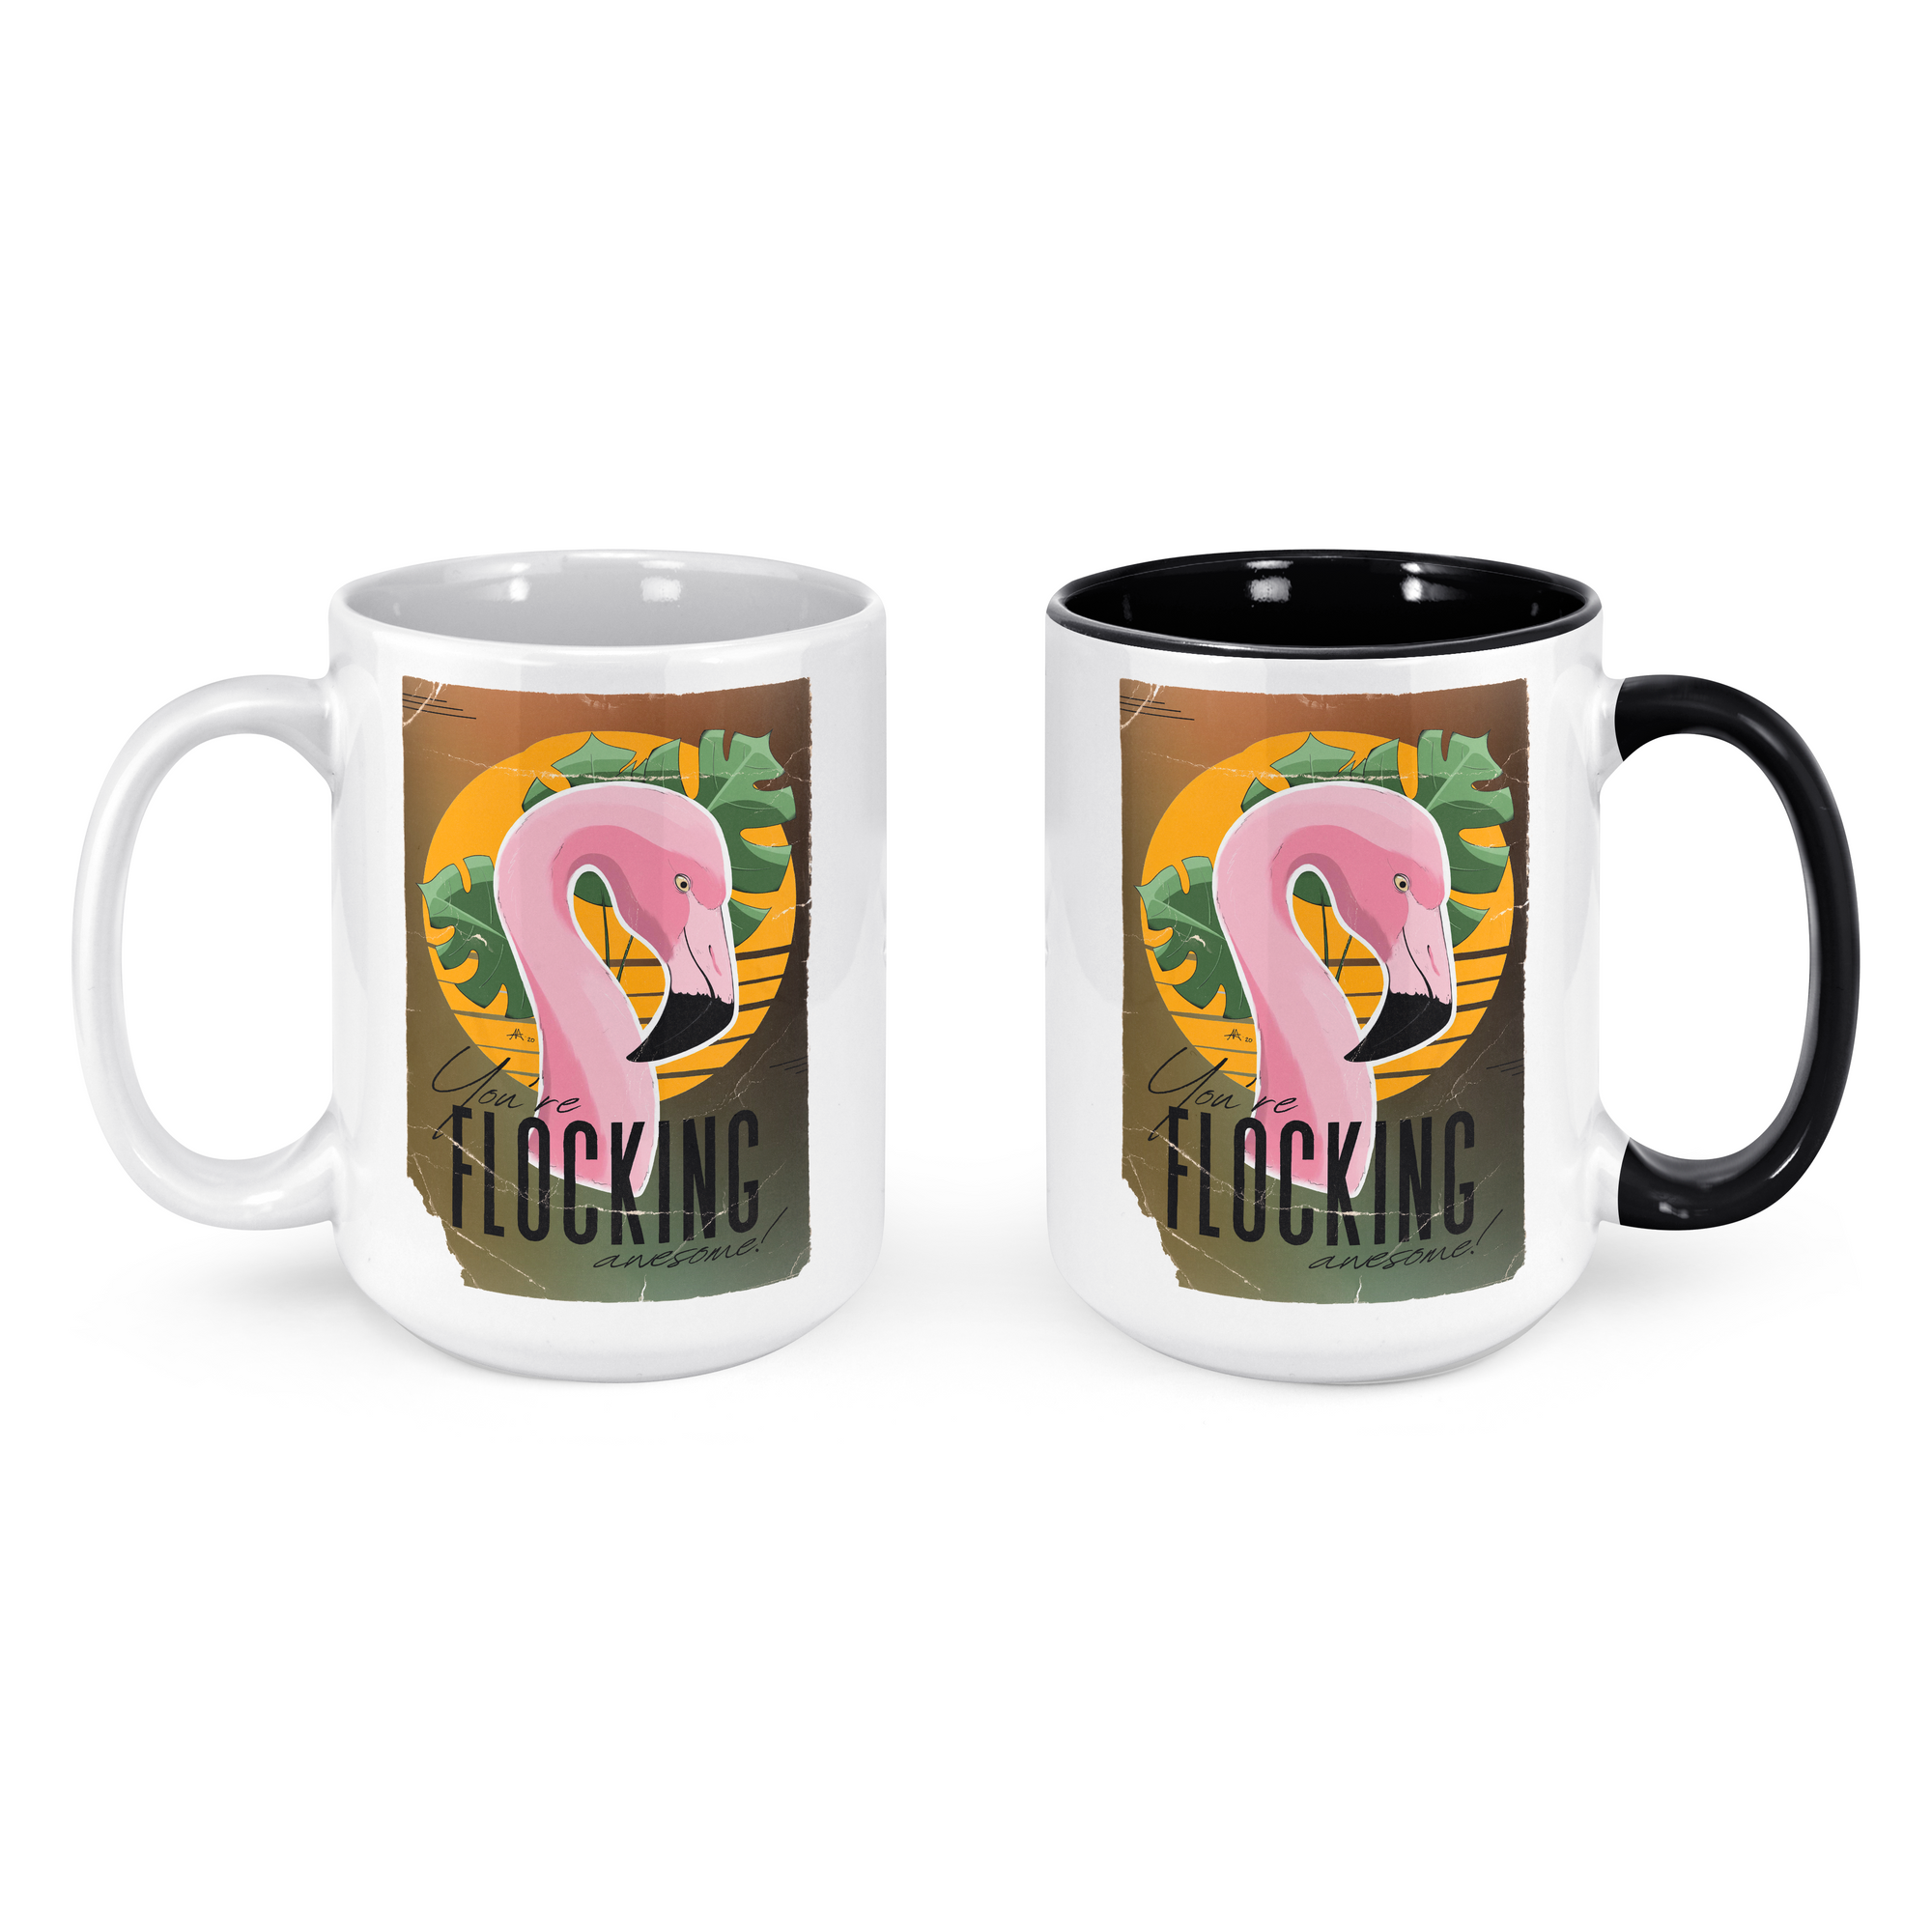 "You're FLOCKING awesome!" - 15oz Coffee Mug